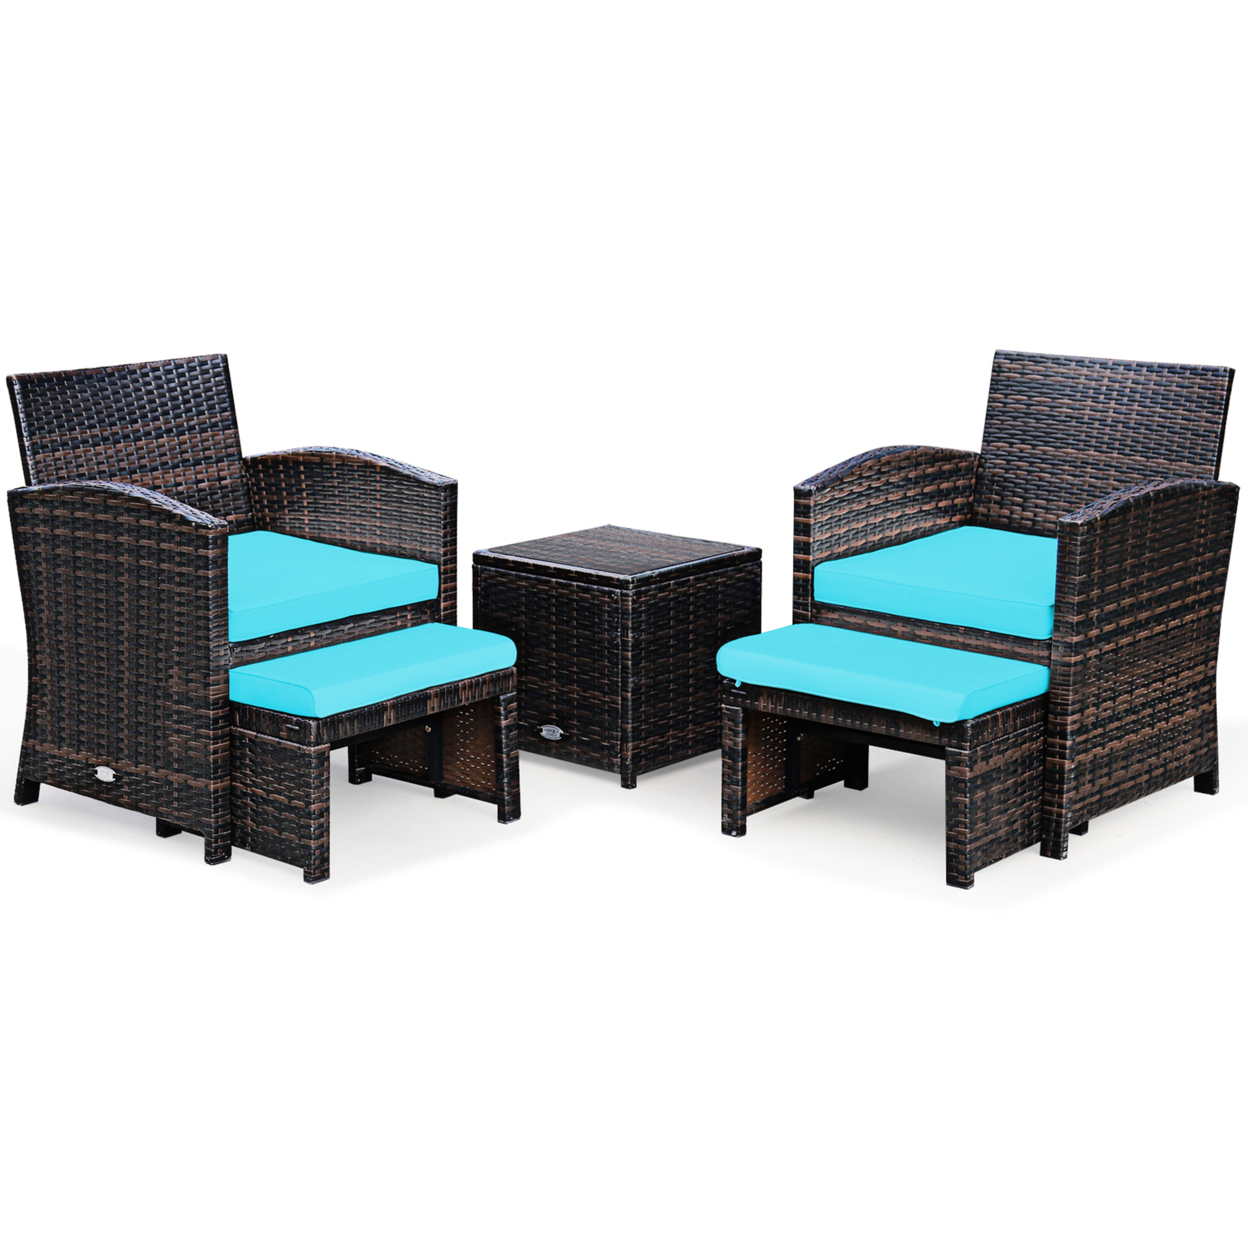 5PCS Rattan Patio Furniture Set Chair & Ottoman Set W/ Turquoise Cushions